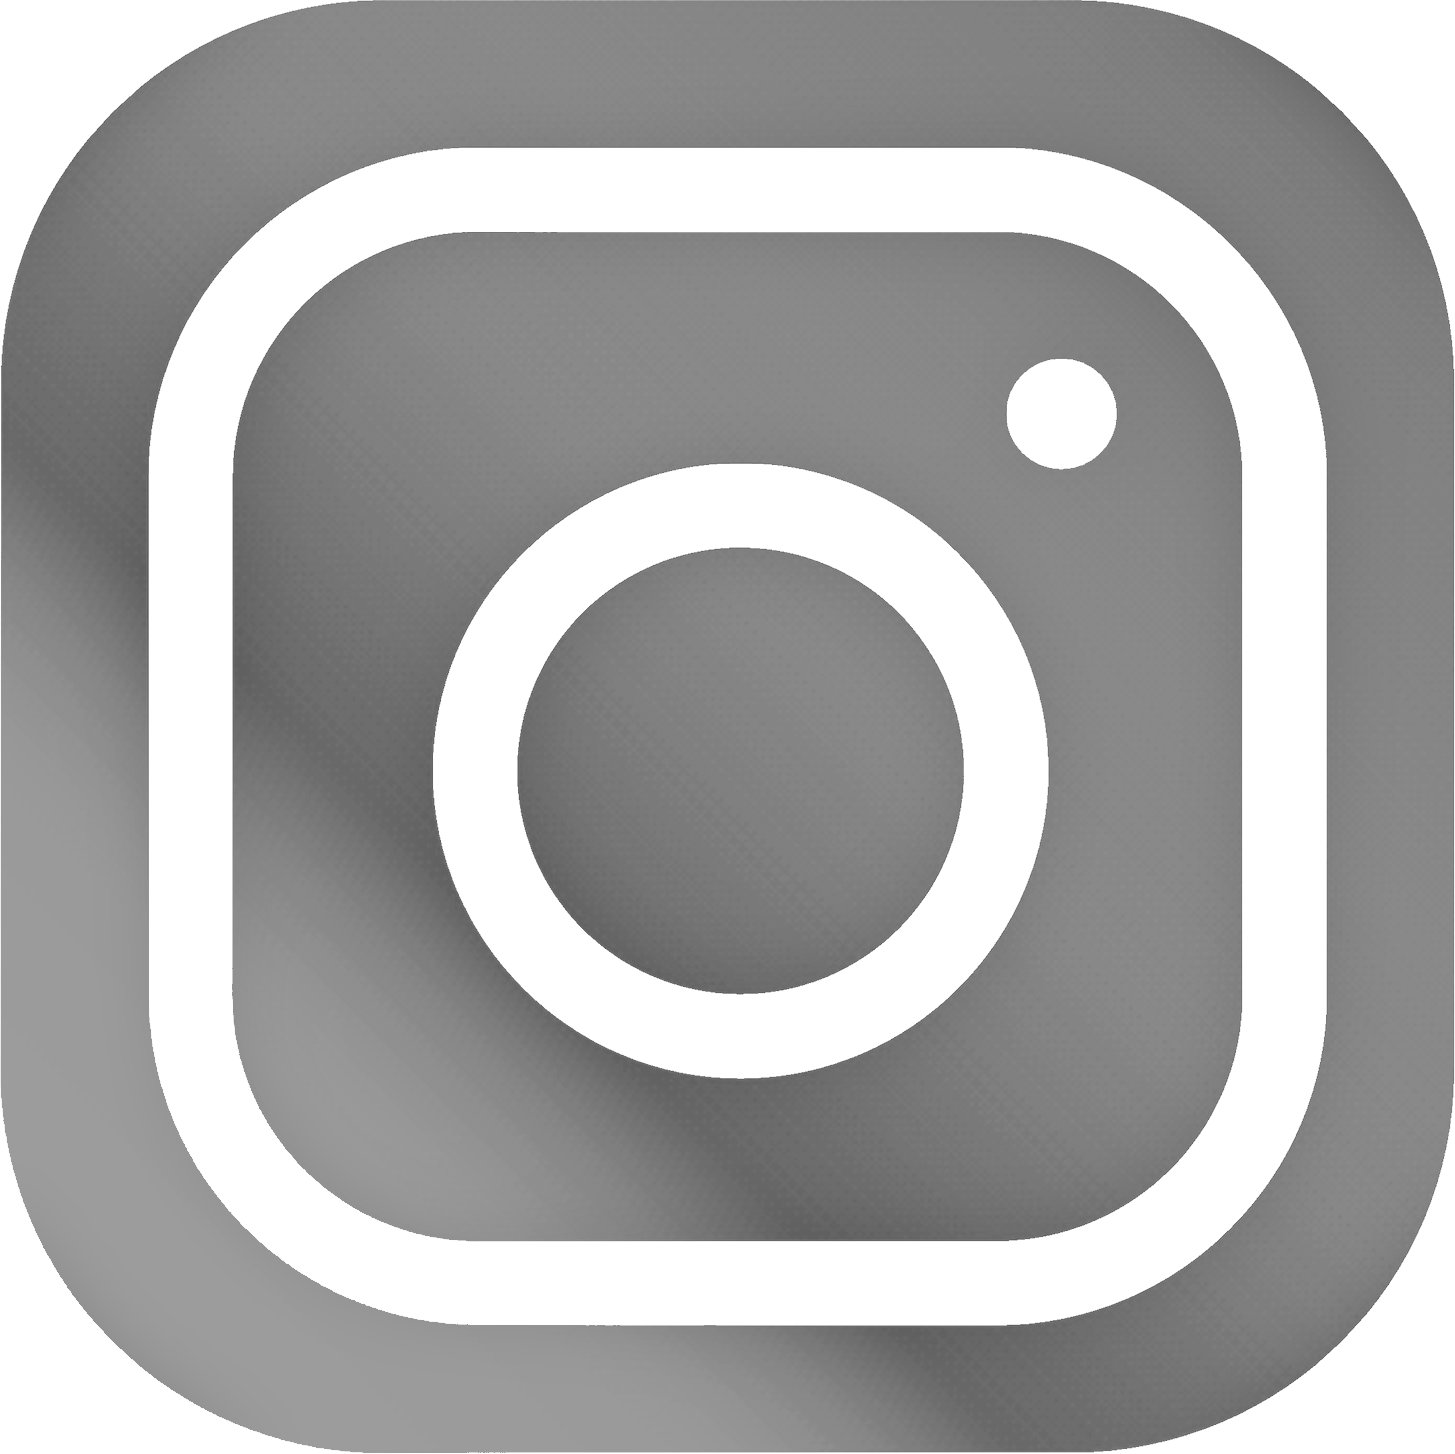 Instagram logo png. Логотип Instagram. Значок Инстаграм. Instagram l. Знак инстаграмма серый.